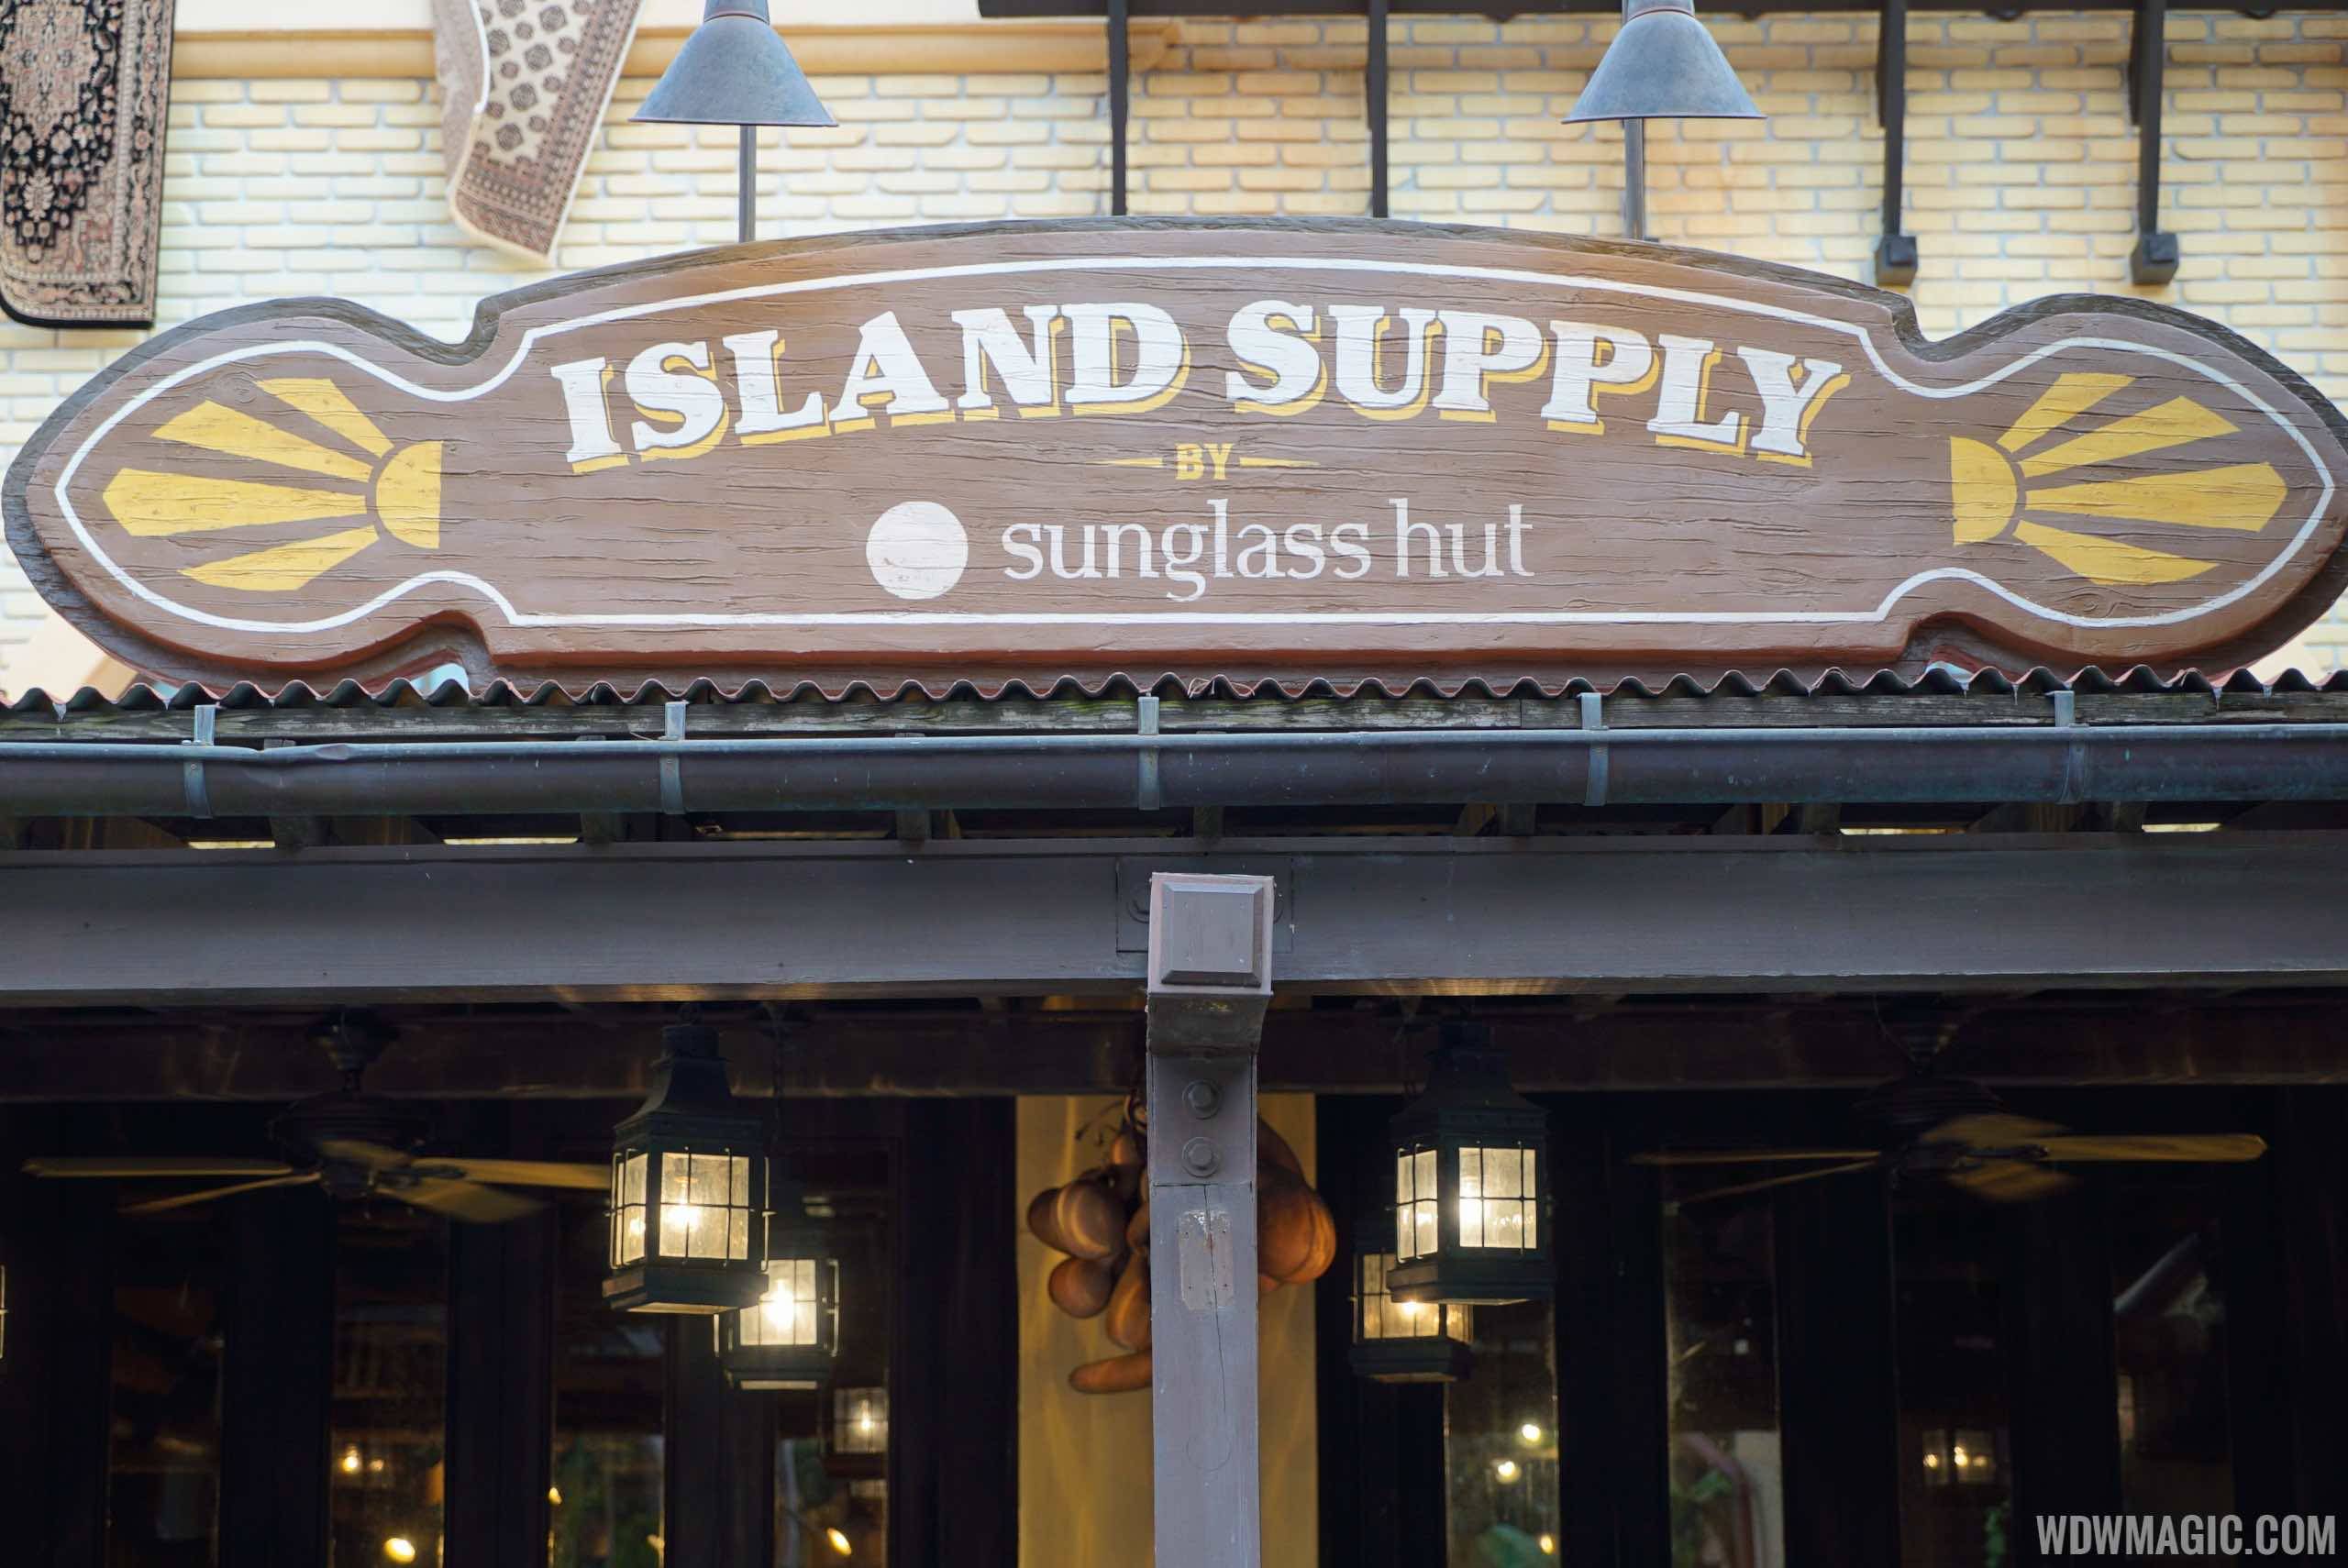 New Island Supply signage